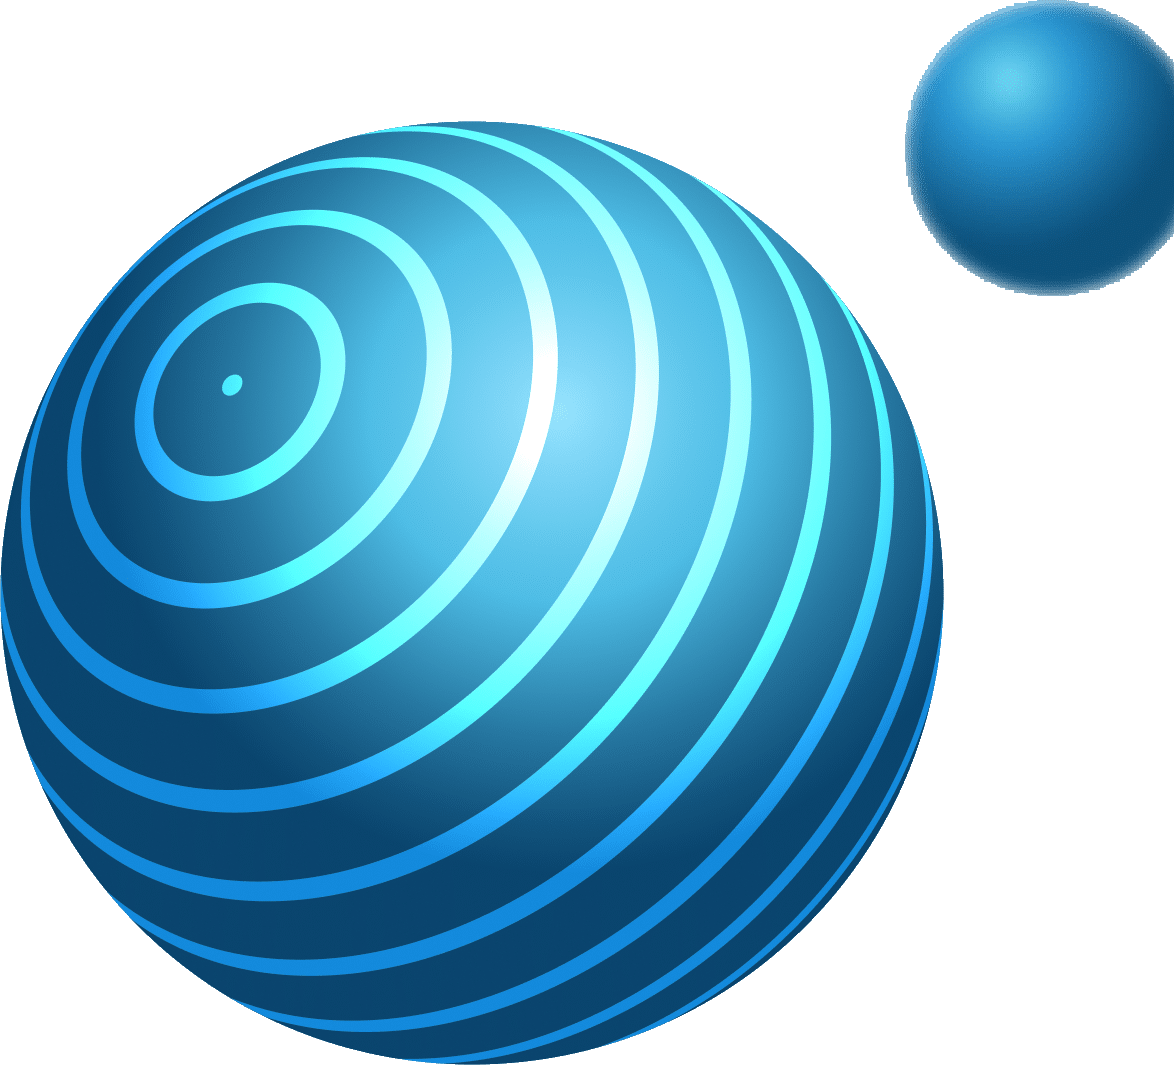 Blue globe and ball image